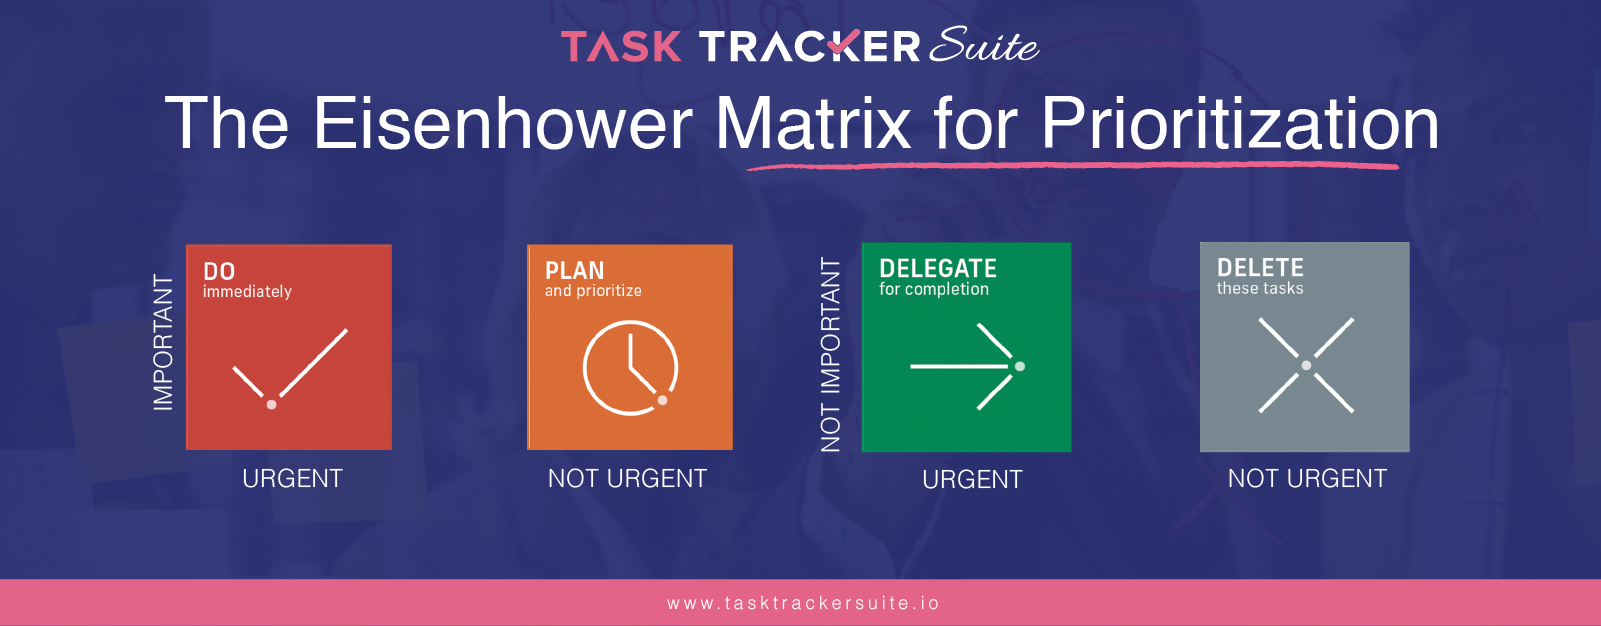 The Eisenhower Matrix for Prioritization